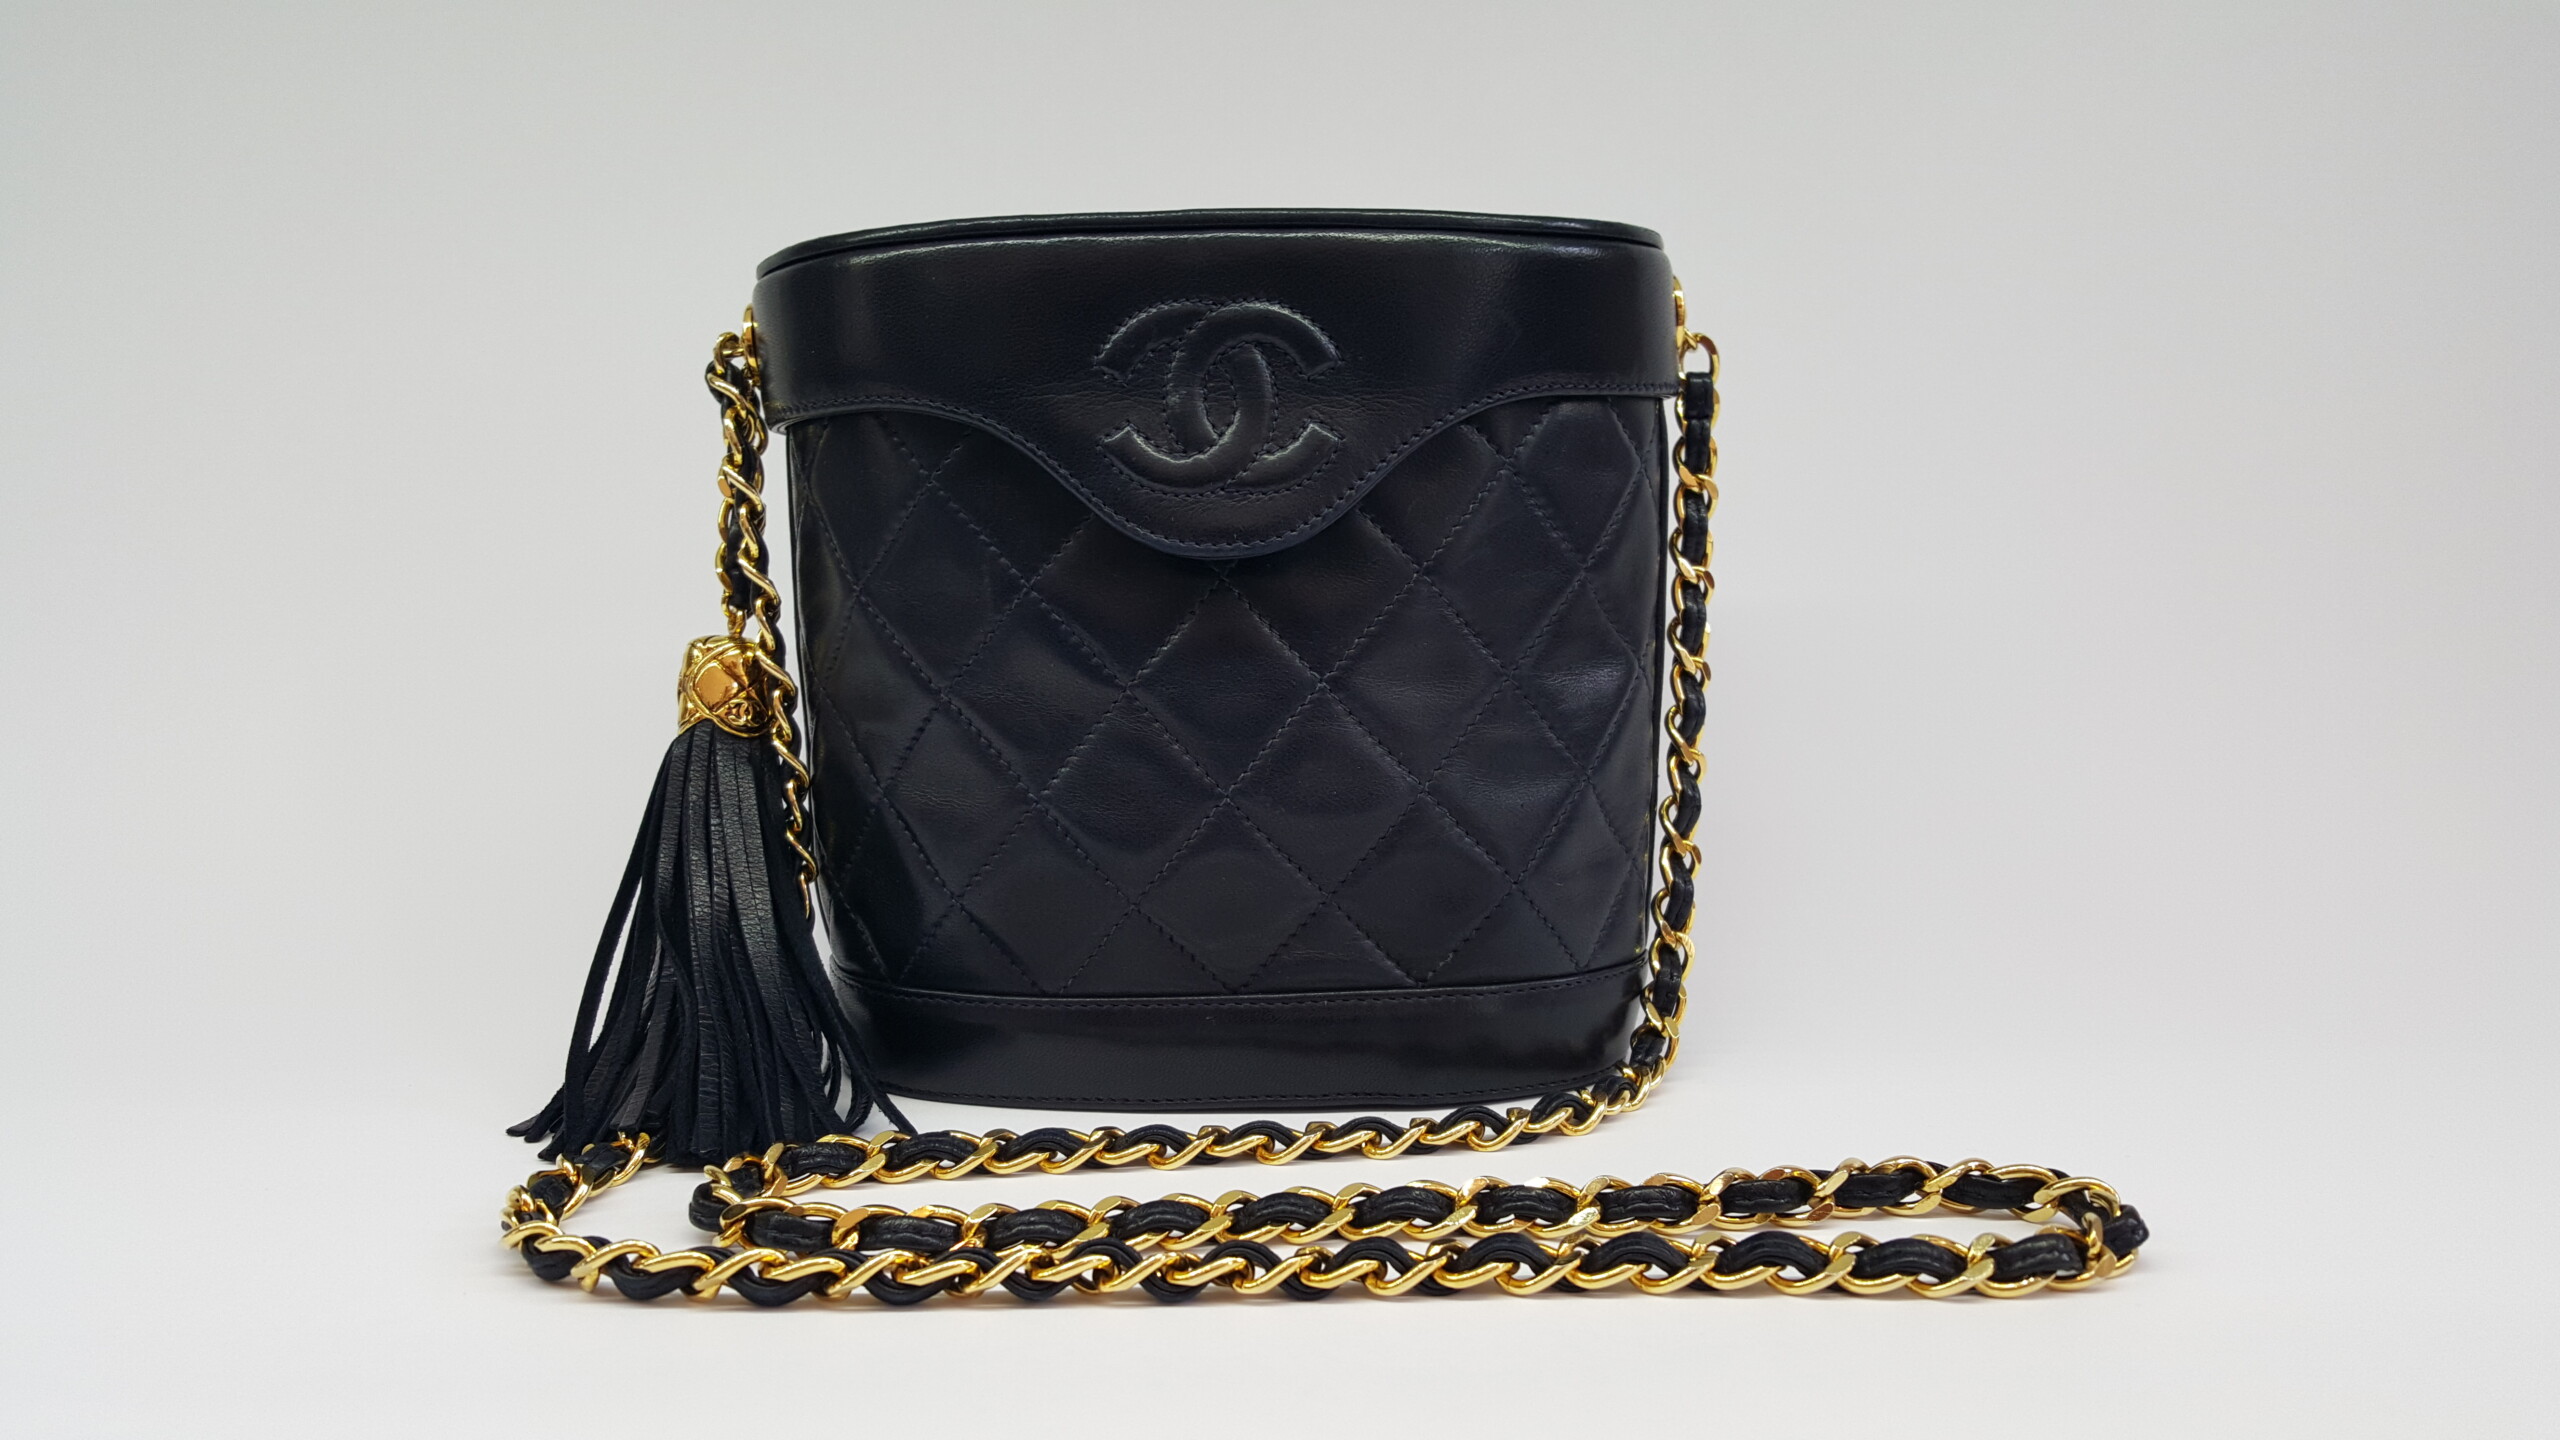 Vintage Cosmo Line Bucket Bag ❣️ Product code : A41688c #chanelbag  #chanelvintage #chanelbucketbag #chanellover #chanelredbag